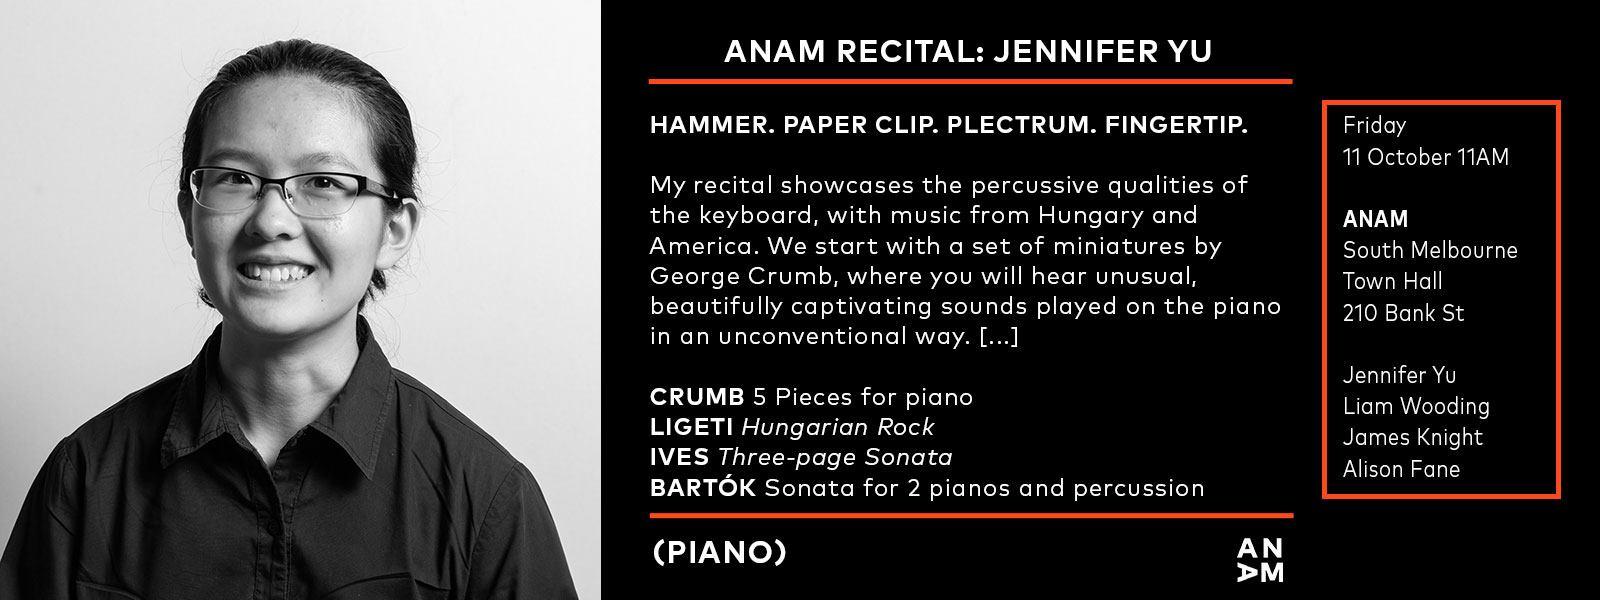 ANAM Recital 2019 Jennifer Yu